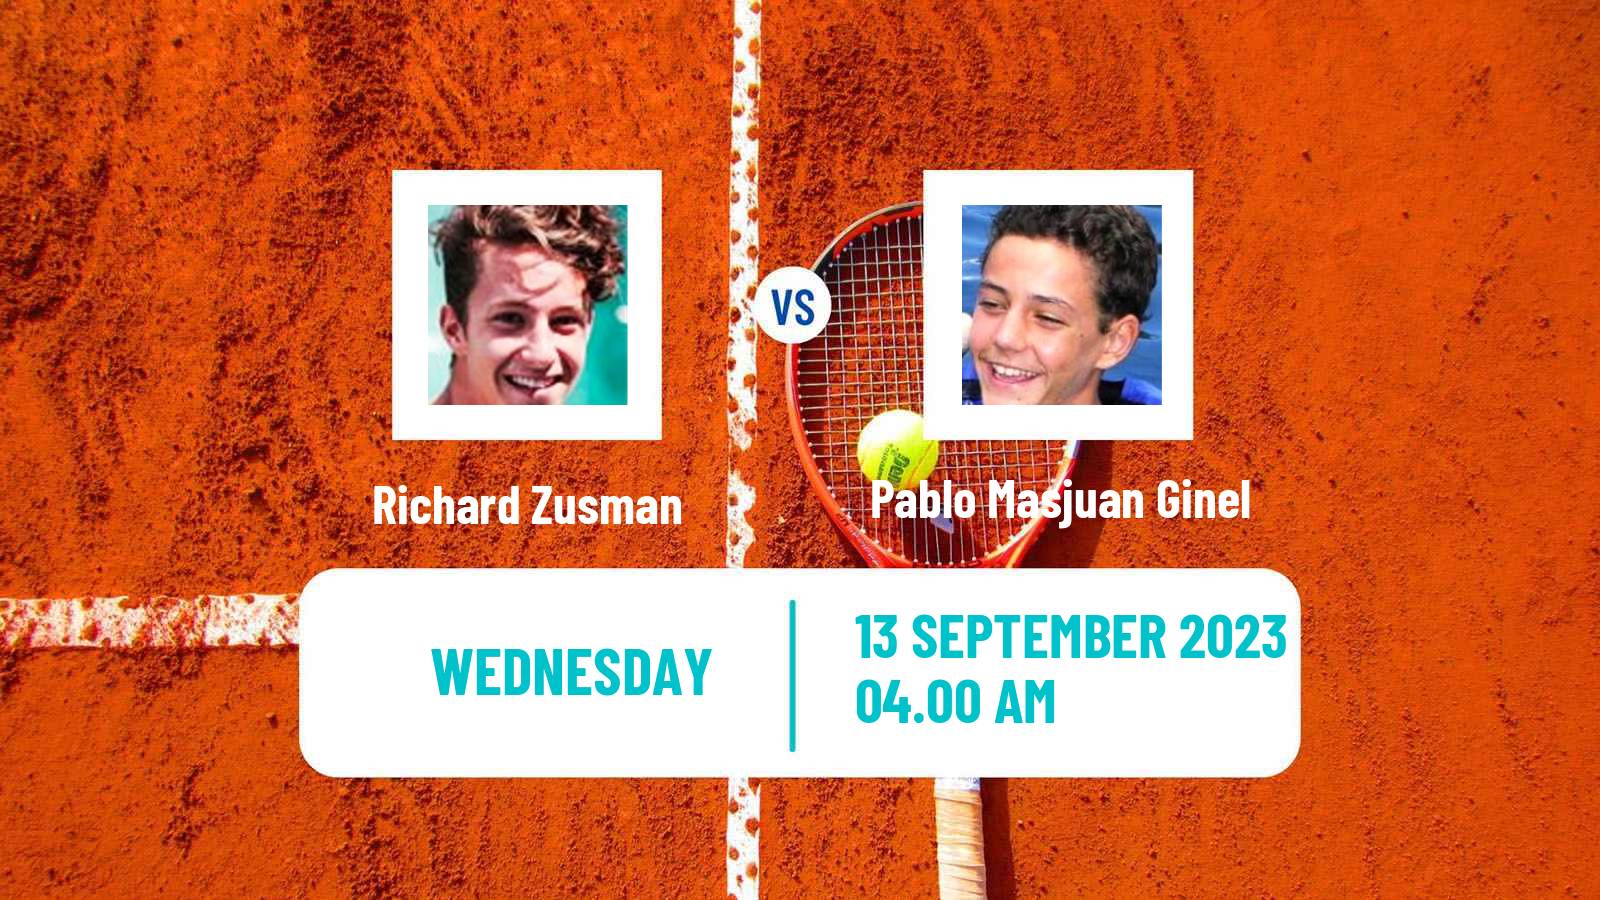 Tennis ITF M25 Madrid Men Richard Zusman - Pablo Masjuan Ginel